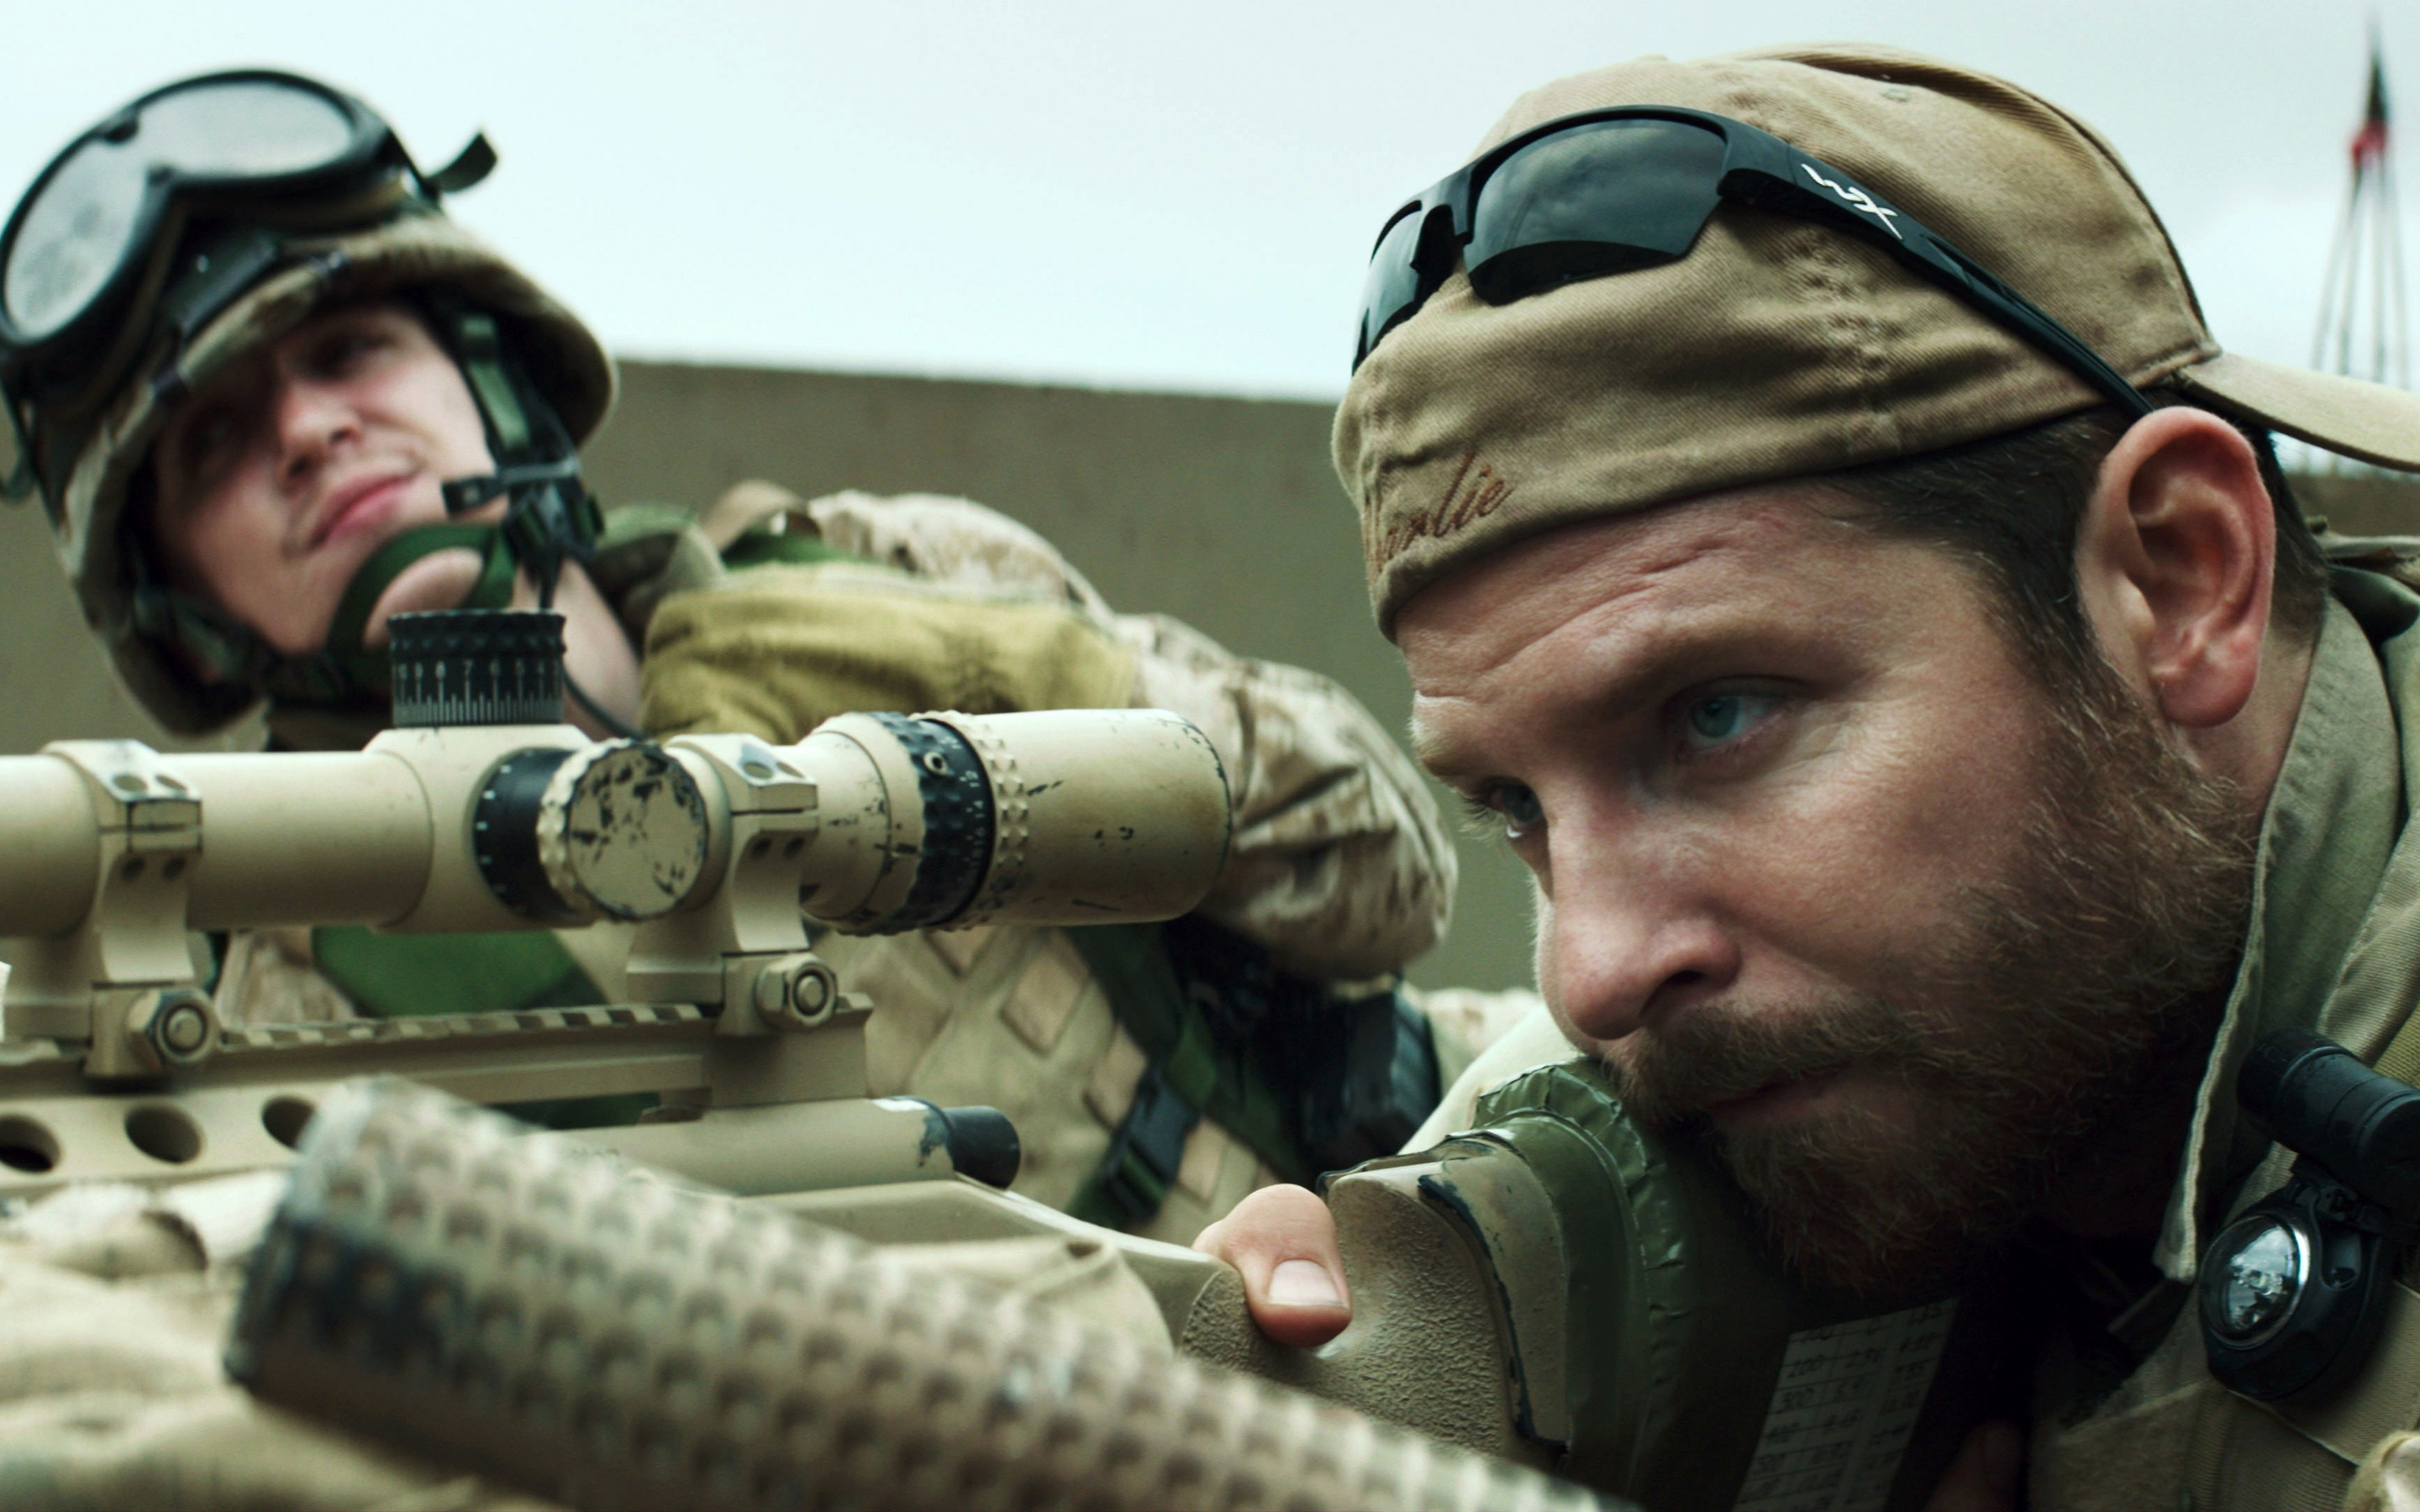 American Sniper Movie Scene for 2880 x 1800 Retina Display resolution